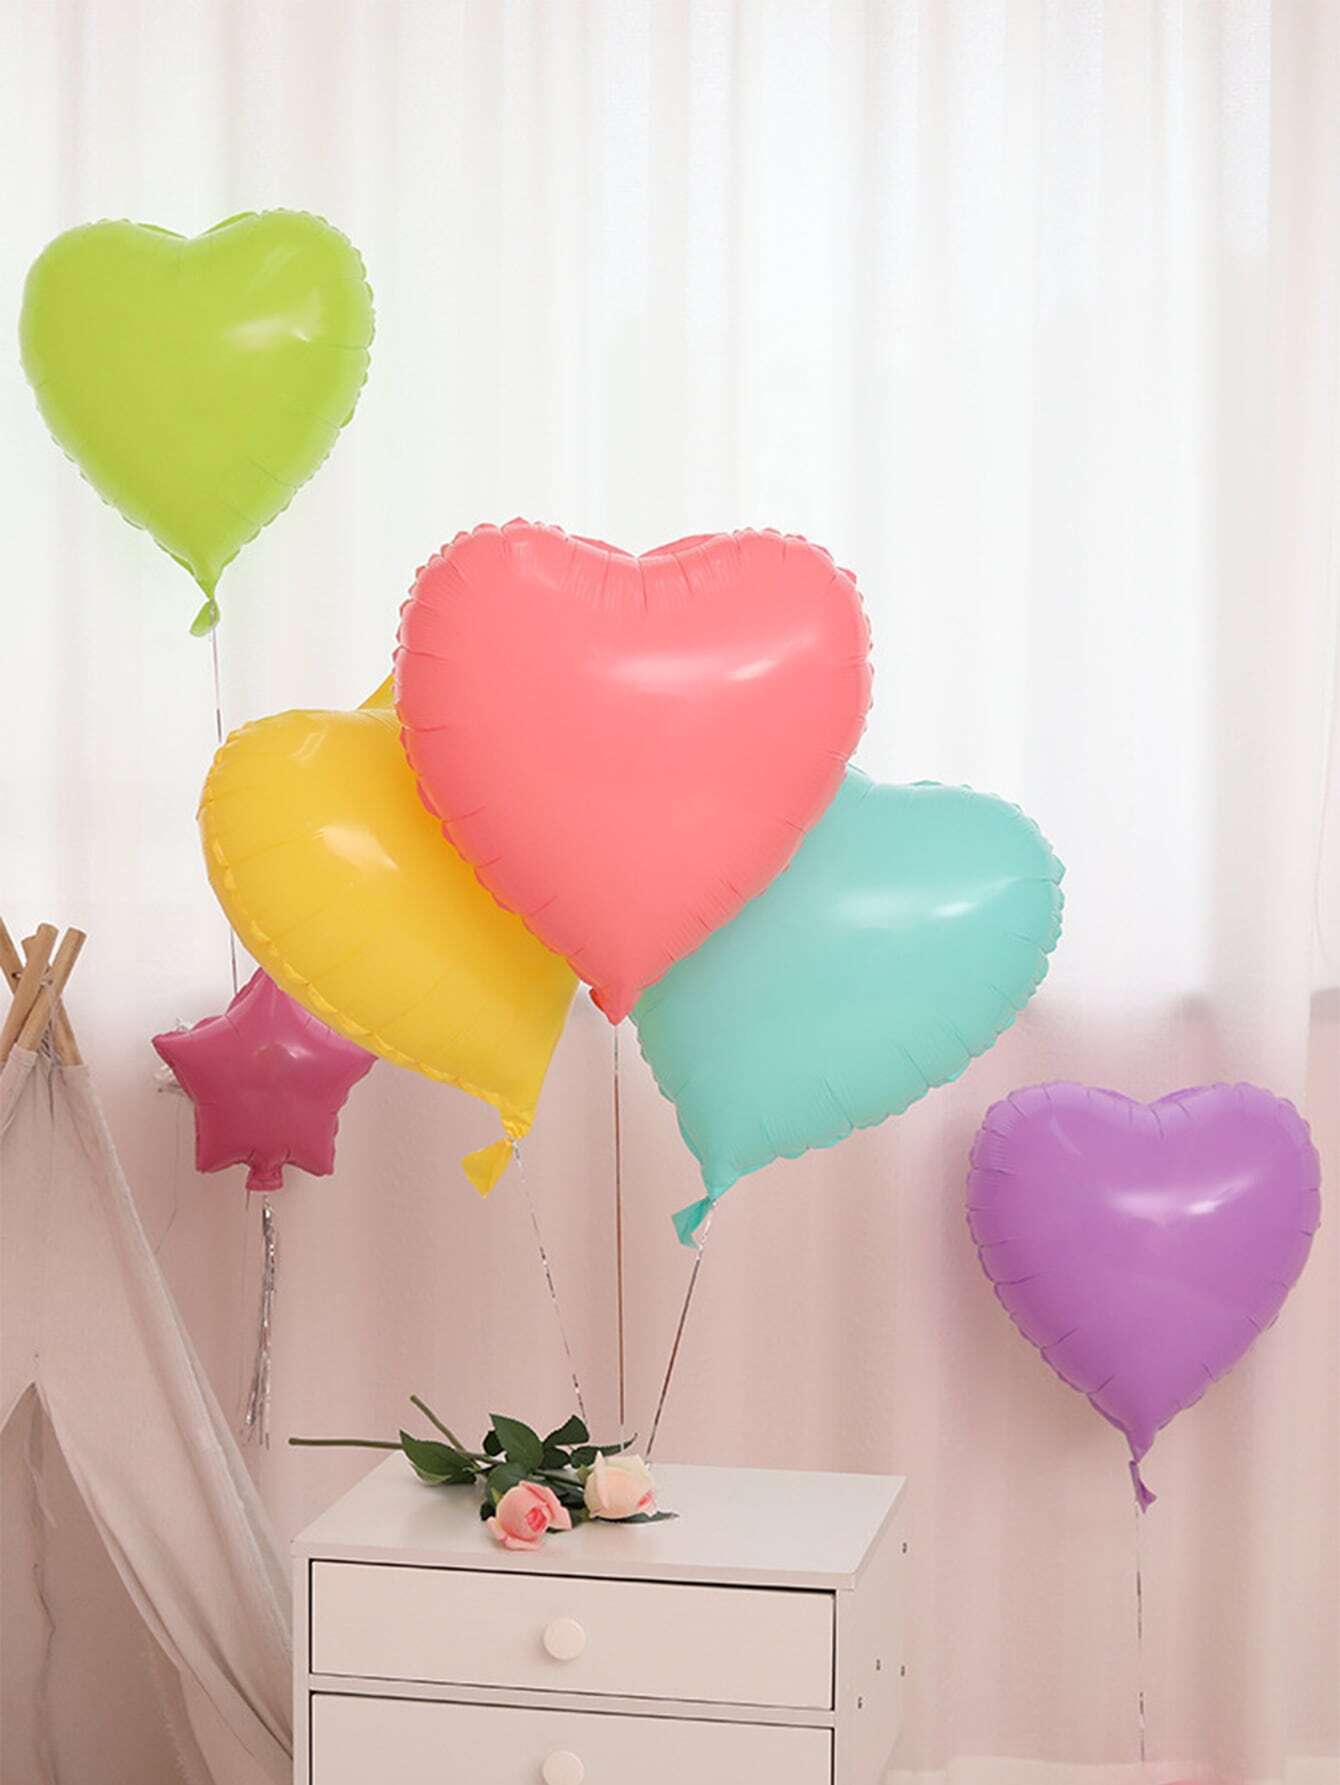 🔥Factory overstock - 10pcs 18inch Aluminum Balloon With 2pcs Balloon Accessories, Pastel Macaron Rainbow Heart Shaped Random Party Celebration Decoration Balloon